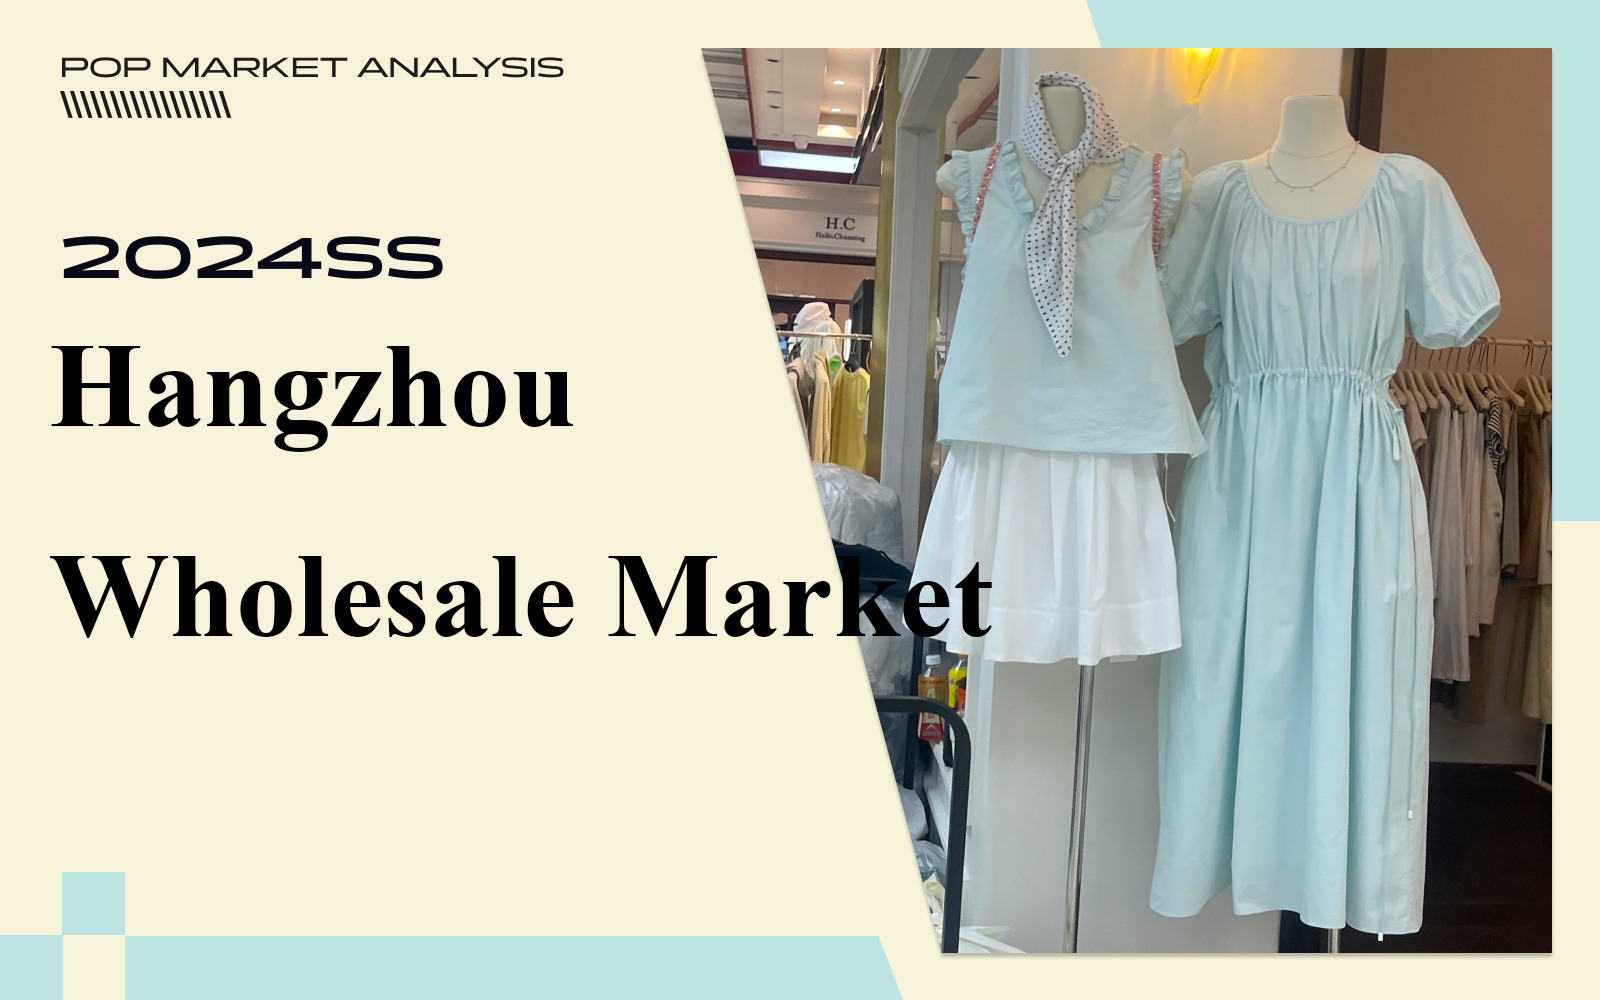 The Analysis of Hangzhou Womenswear Wholesale Market